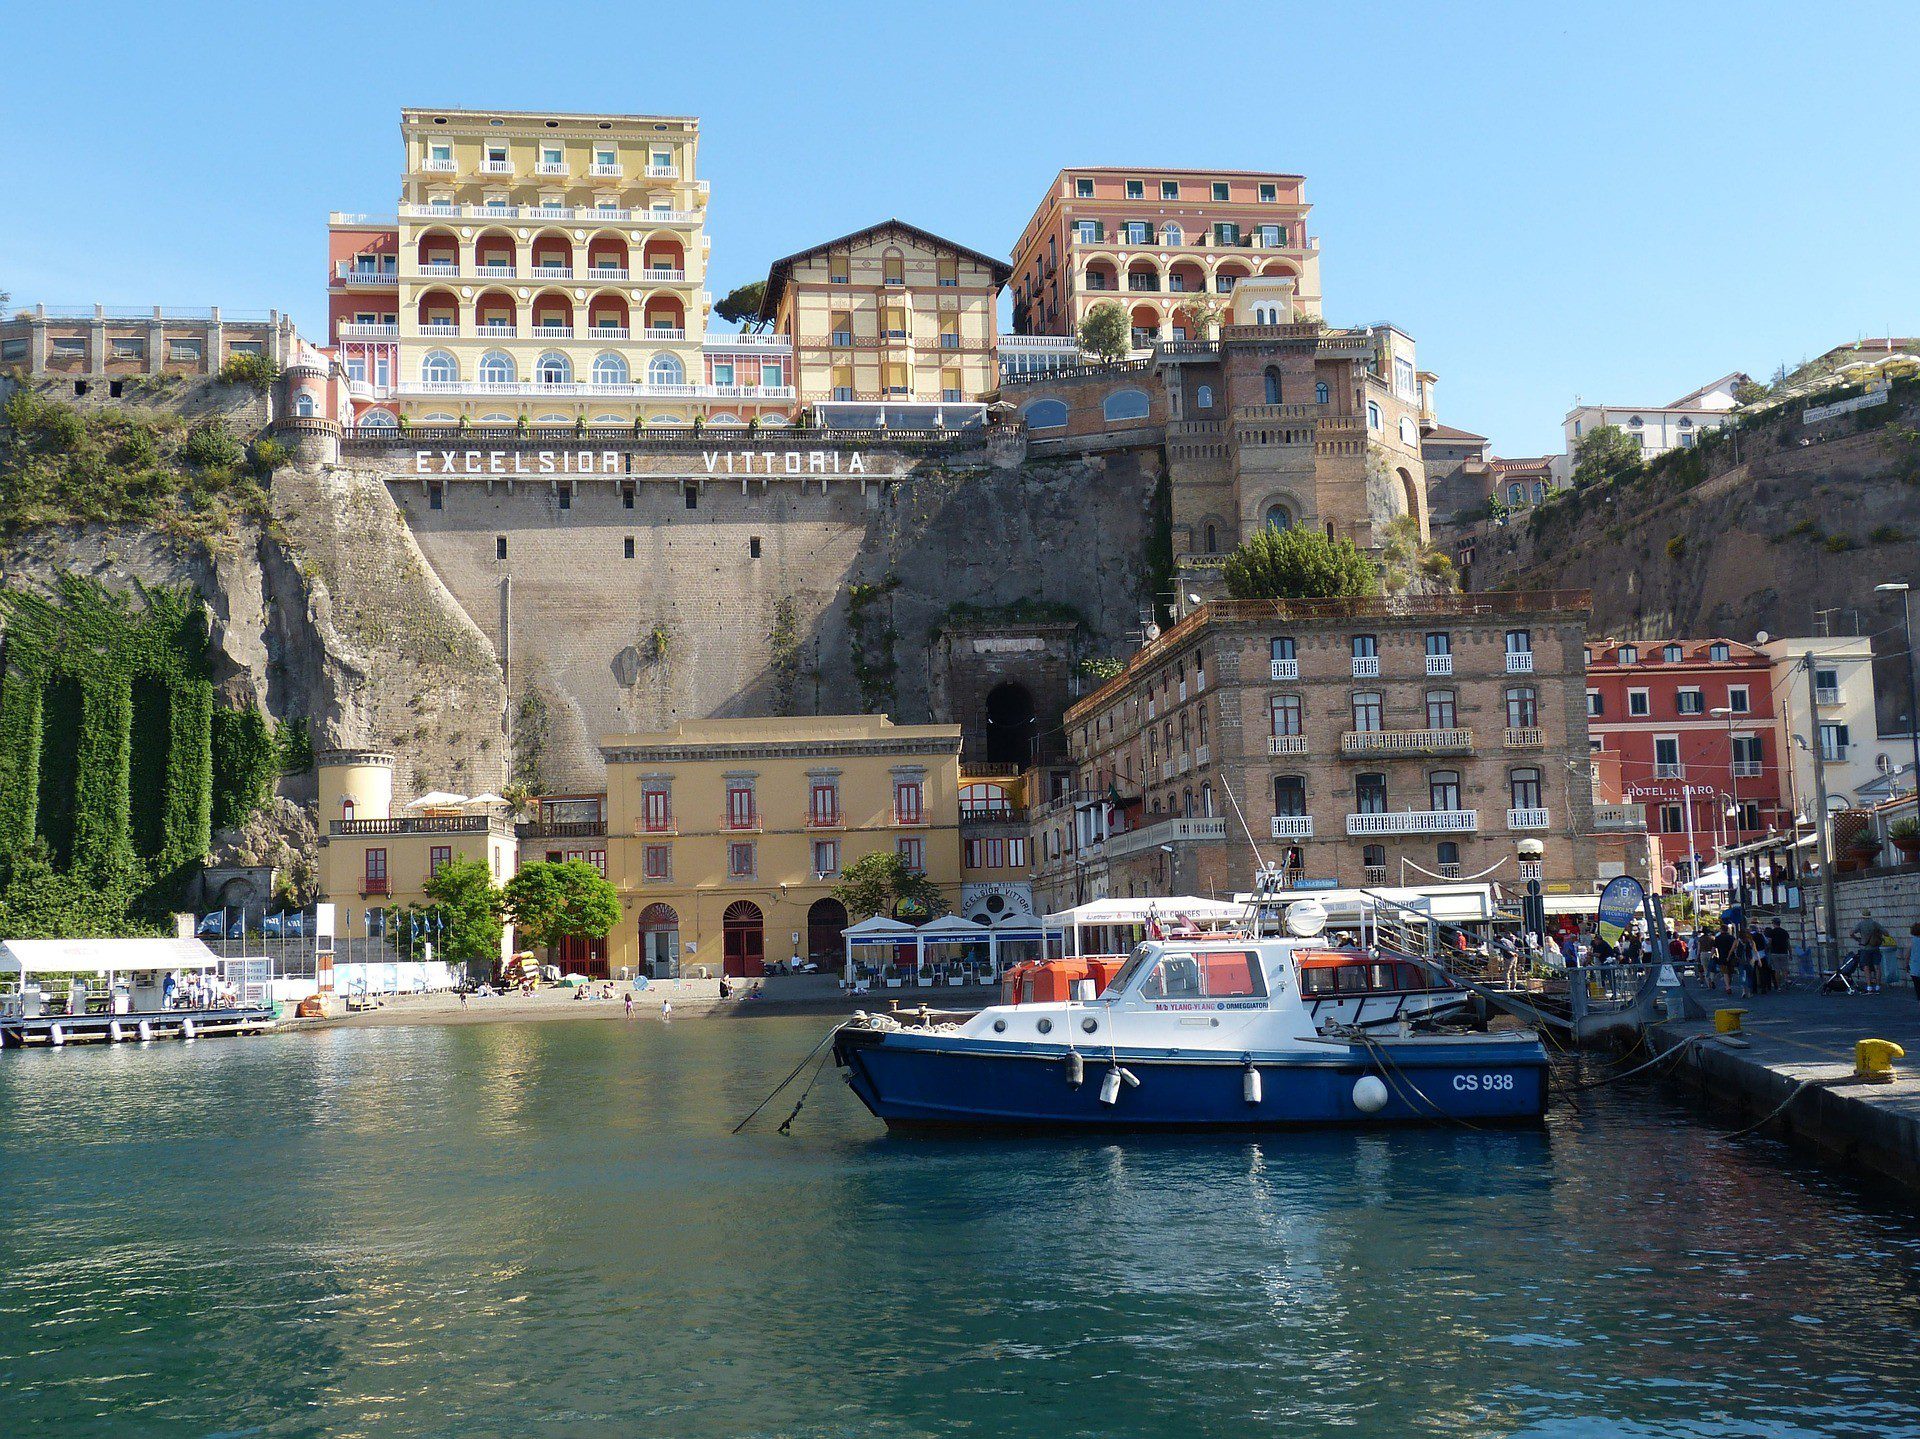 Celebrity Mediterranean Cruise Destinations: The Harbor of Sorrento, Italy